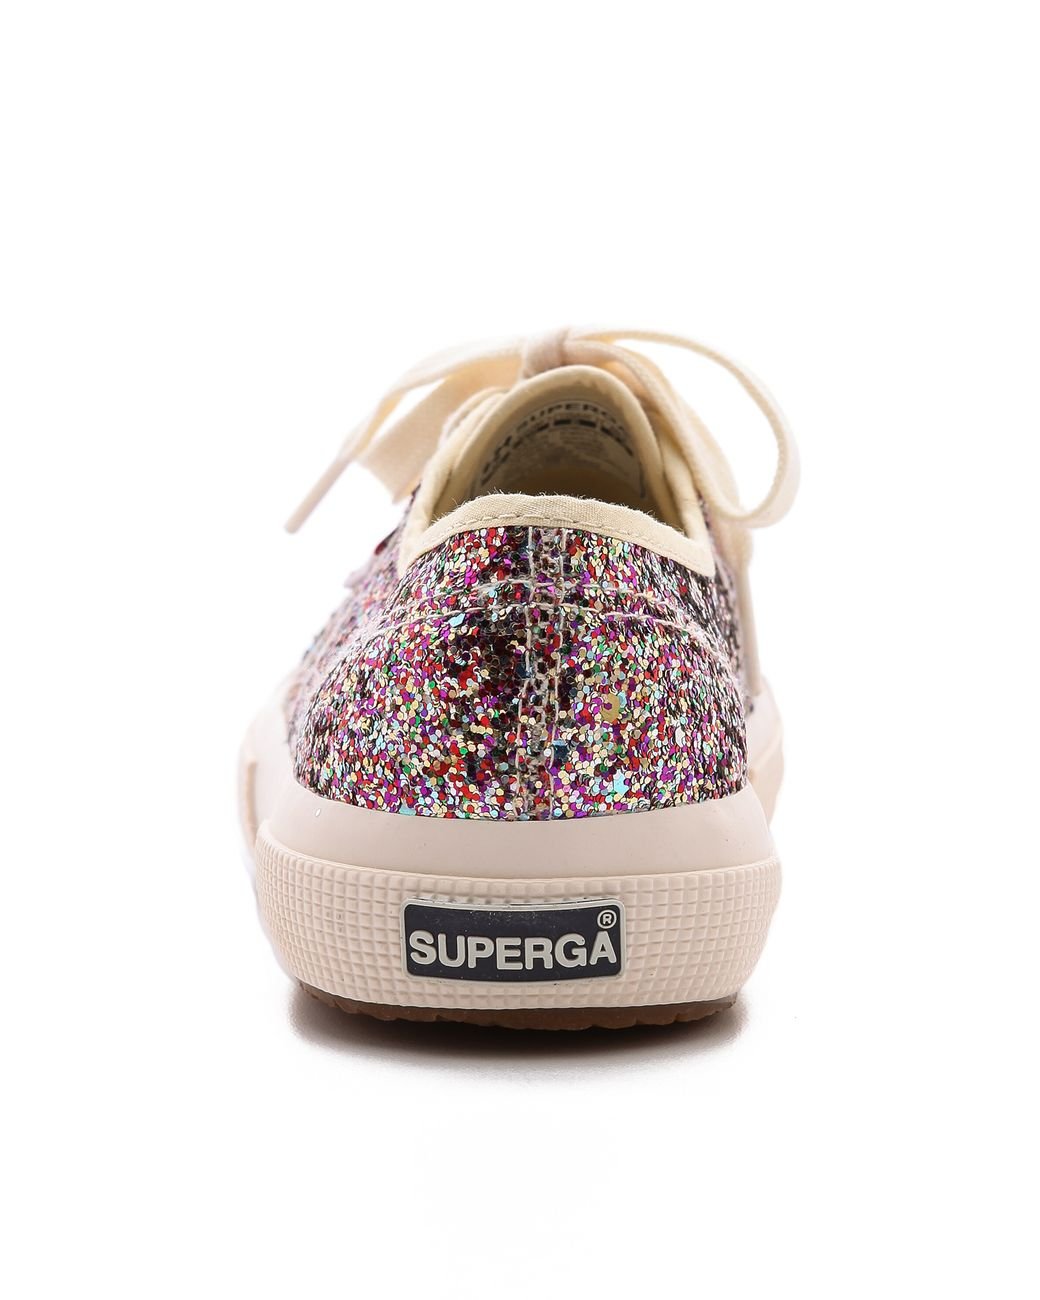 Superga Glitter Sneakers - Multi | Lyst